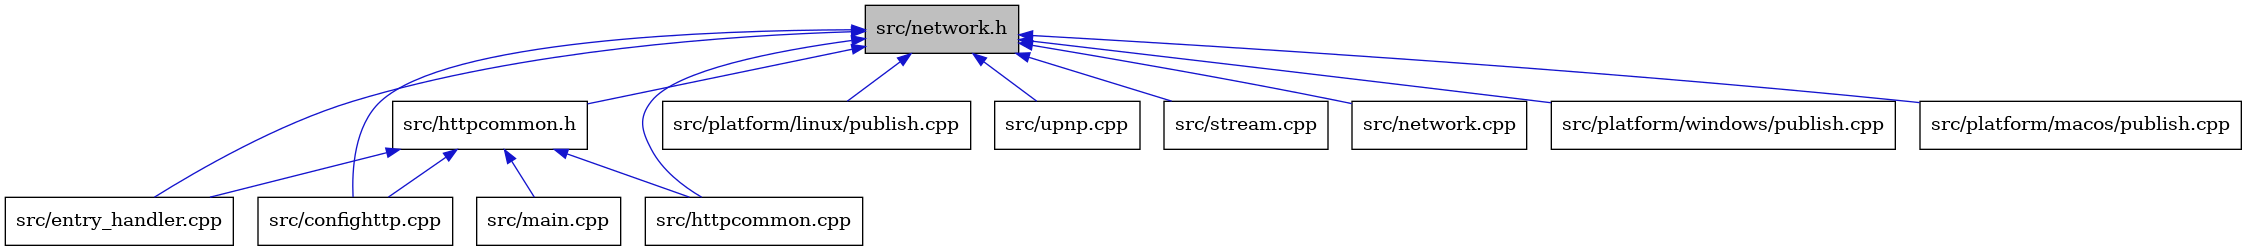 digraph {
    graph [bgcolor="#00000000"]
    node [shape=rectangle style=filled fillcolor="#FFFFFF" font=Helvetica padding=2]
    edge [color="#1414CE"]
    "3" [label="src/entry_handler.cpp" tooltip="src/entry_handler.cpp"]
    "2" [label="src/confighttp.cpp" tooltip="src/confighttp.cpp"]
    "8" [label="src/platform/linux/publish.cpp" tooltip="src/platform/linux/publish.cpp"]
    "12" [label="src/upnp.cpp" tooltip="src/upnp.cpp"]
    "11" [label="src/stream.cpp" tooltip="src/stream.cpp"]
    "5" [label="src/httpcommon.cpp" tooltip="src/httpcommon.cpp"]
    "7" [label="src/network.cpp" tooltip="src/network.cpp"]
    "1" [label="src/network.h" tooltip="src/network.h" fillcolor="#BFBFBF"]
    "10" [label="src/platform/windows/publish.cpp" tooltip="src/platform/windows/publish.cpp"]
    "9" [label="src/platform/macos/publish.cpp" tooltip="src/platform/macos/publish.cpp"]
    "4" [label="src/httpcommon.h" tooltip="src/httpcommon.h"]
    "6" [label="src/main.cpp" tooltip="src/main.cpp"]
    "1" -> "2" [dir=back tooltip="include"]
    "1" -> "3" [dir=back tooltip="include"]
    "1" -> "4" [dir=back tooltip="include"]
    "1" -> "5" [dir=back tooltip="include"]
    "1" -> "7" [dir=back tooltip="include"]
    "1" -> "8" [dir=back tooltip="include"]
    "1" -> "9" [dir=back tooltip="include"]
    "1" -> "10" [dir=back tooltip="include"]
    "1" -> "11" [dir=back tooltip="include"]
    "1" -> "12" [dir=back tooltip="include"]
    "4" -> "2" [dir=back tooltip="include"]
    "4" -> "3" [dir=back tooltip="include"]
    "4" -> "5" [dir=back tooltip="include"]
    "4" -> "6" [dir=back tooltip="include"]
}